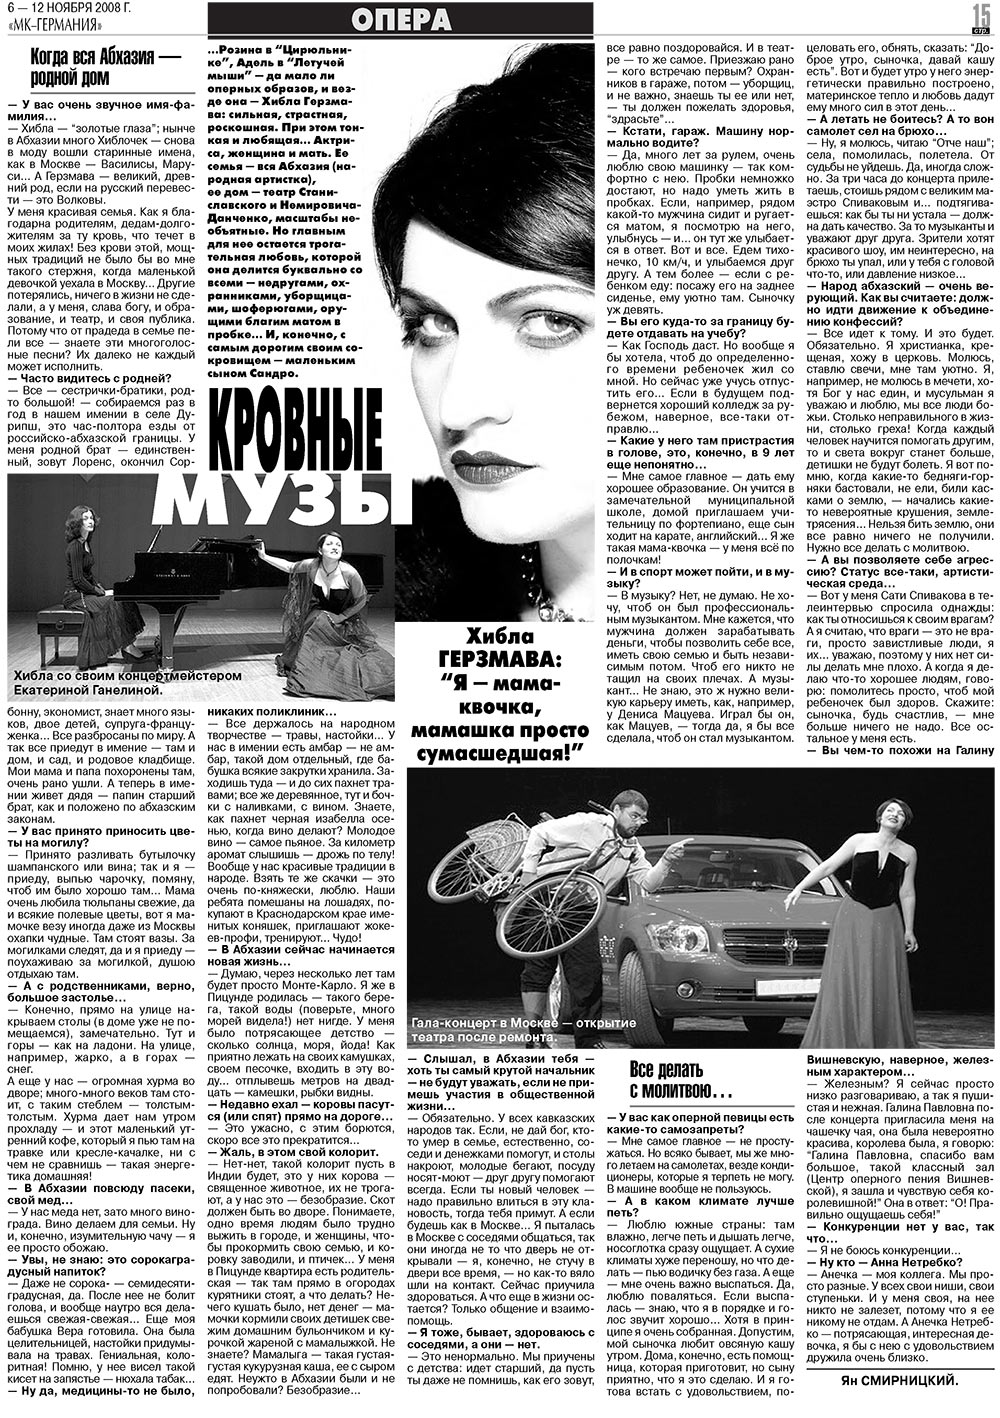 МК-Германия, газета. 2008 №45 стр.15